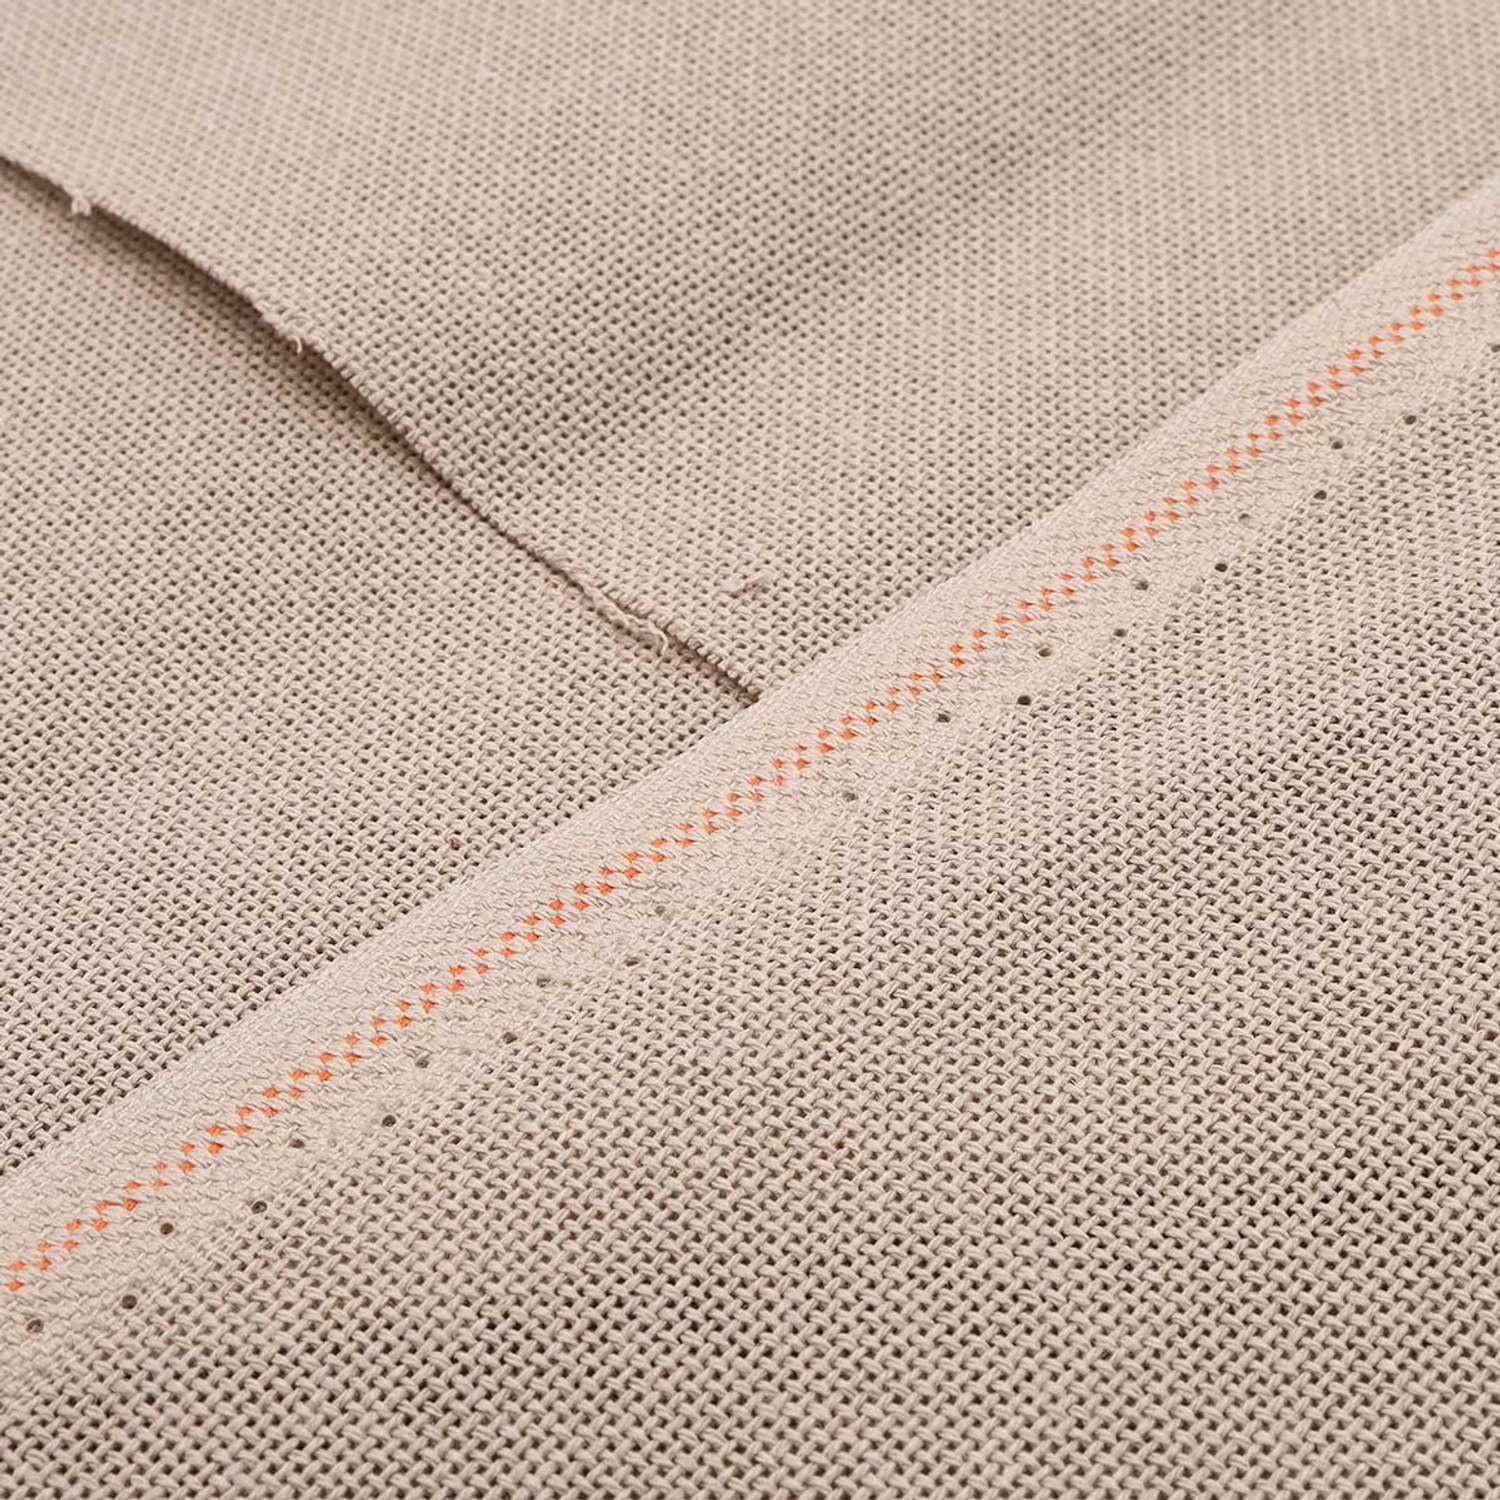 Канва Zweigart для вышивания шитья и рукоделия 27ct 50х70 см бежевая - фото 4